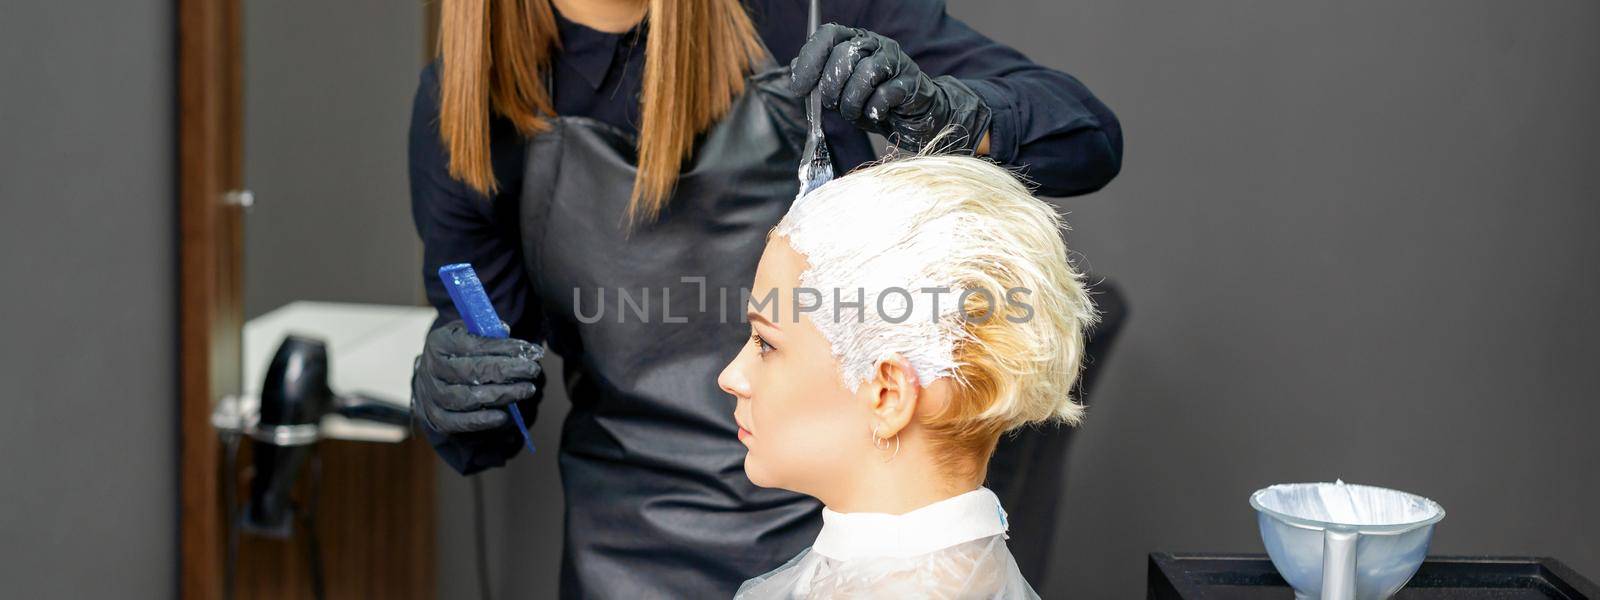 Hairdressers dyeing hair of woman by okskukuruza